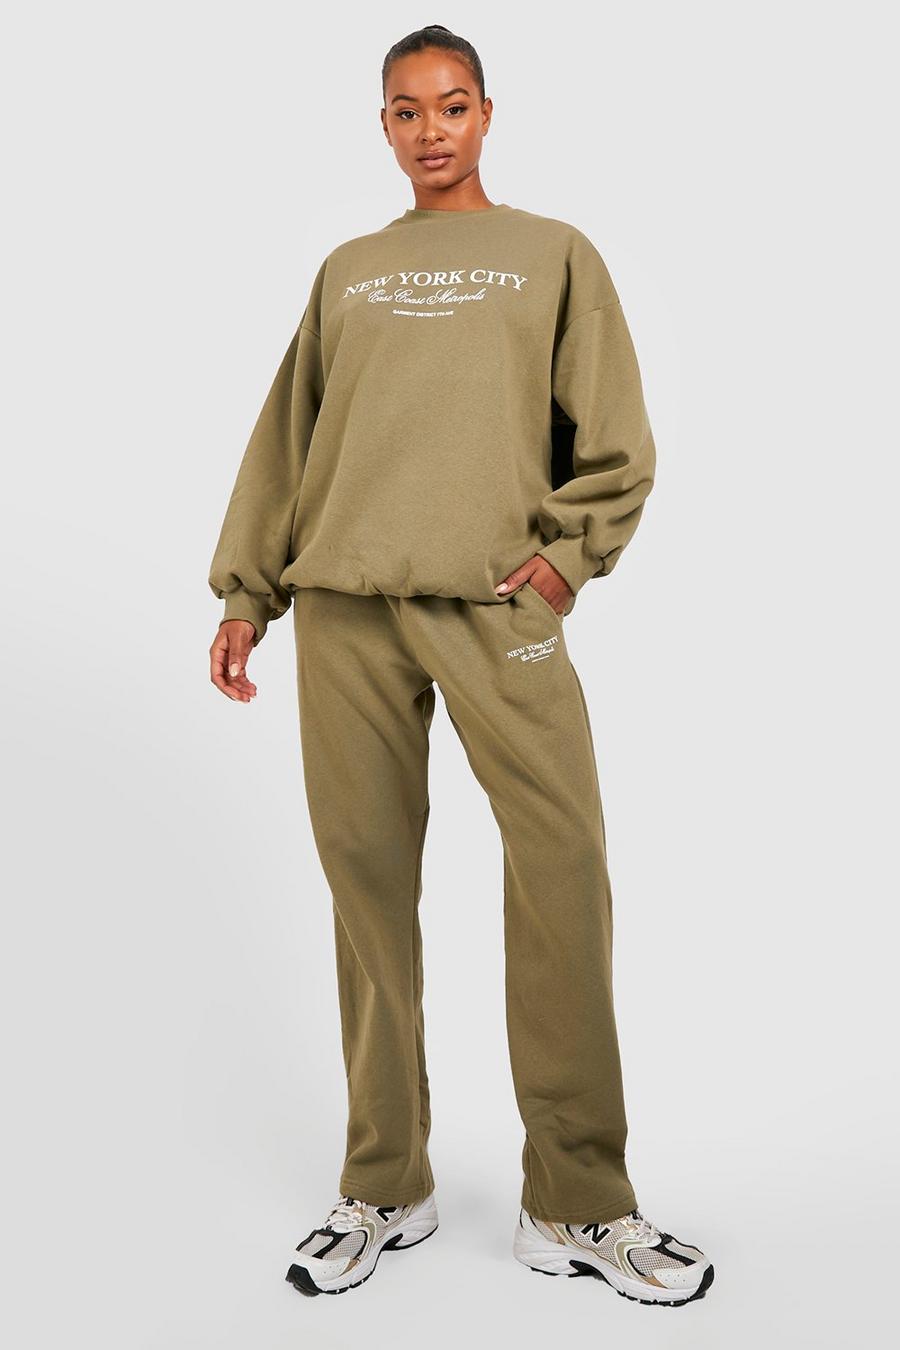 Khaki Tall New York Printed Sweatshirt Tracksuit